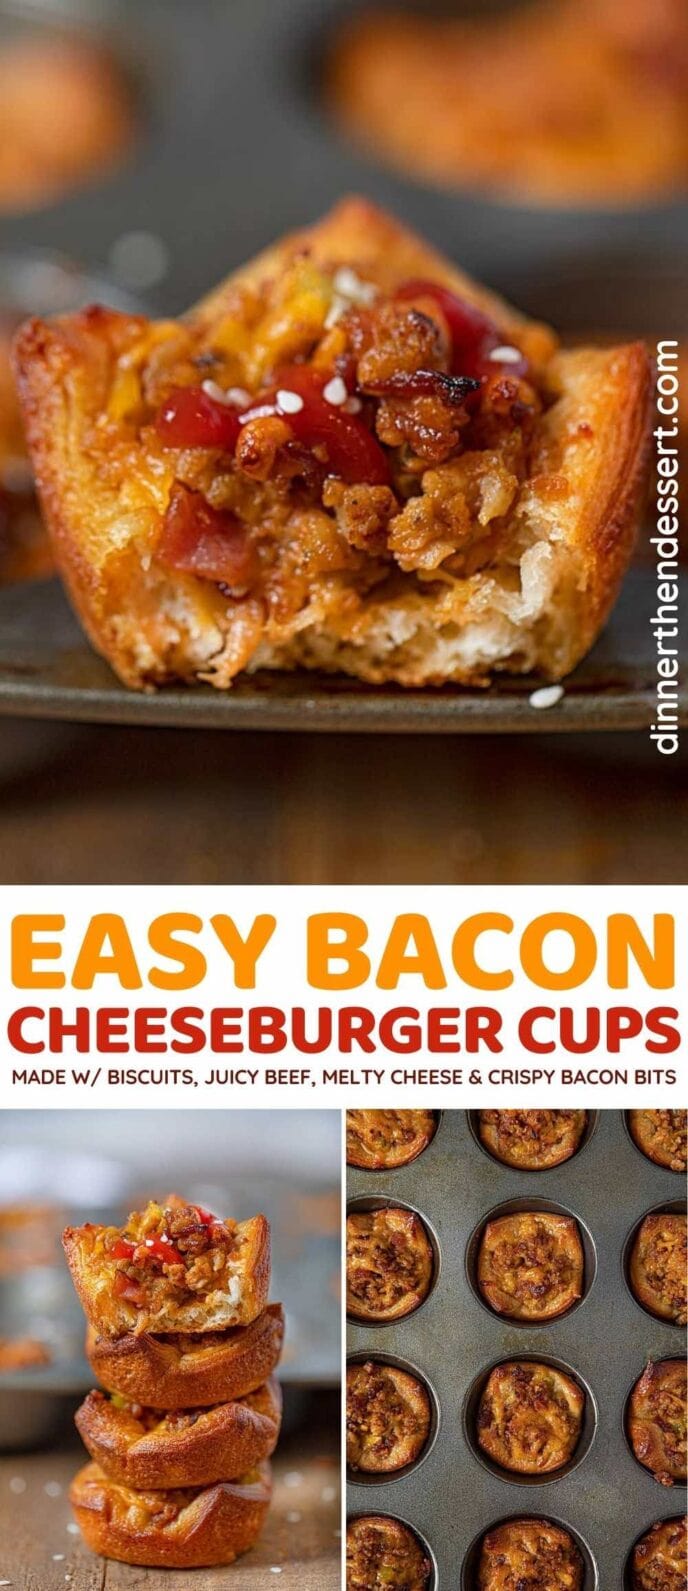 Bacon Cheeseburger Cups collage